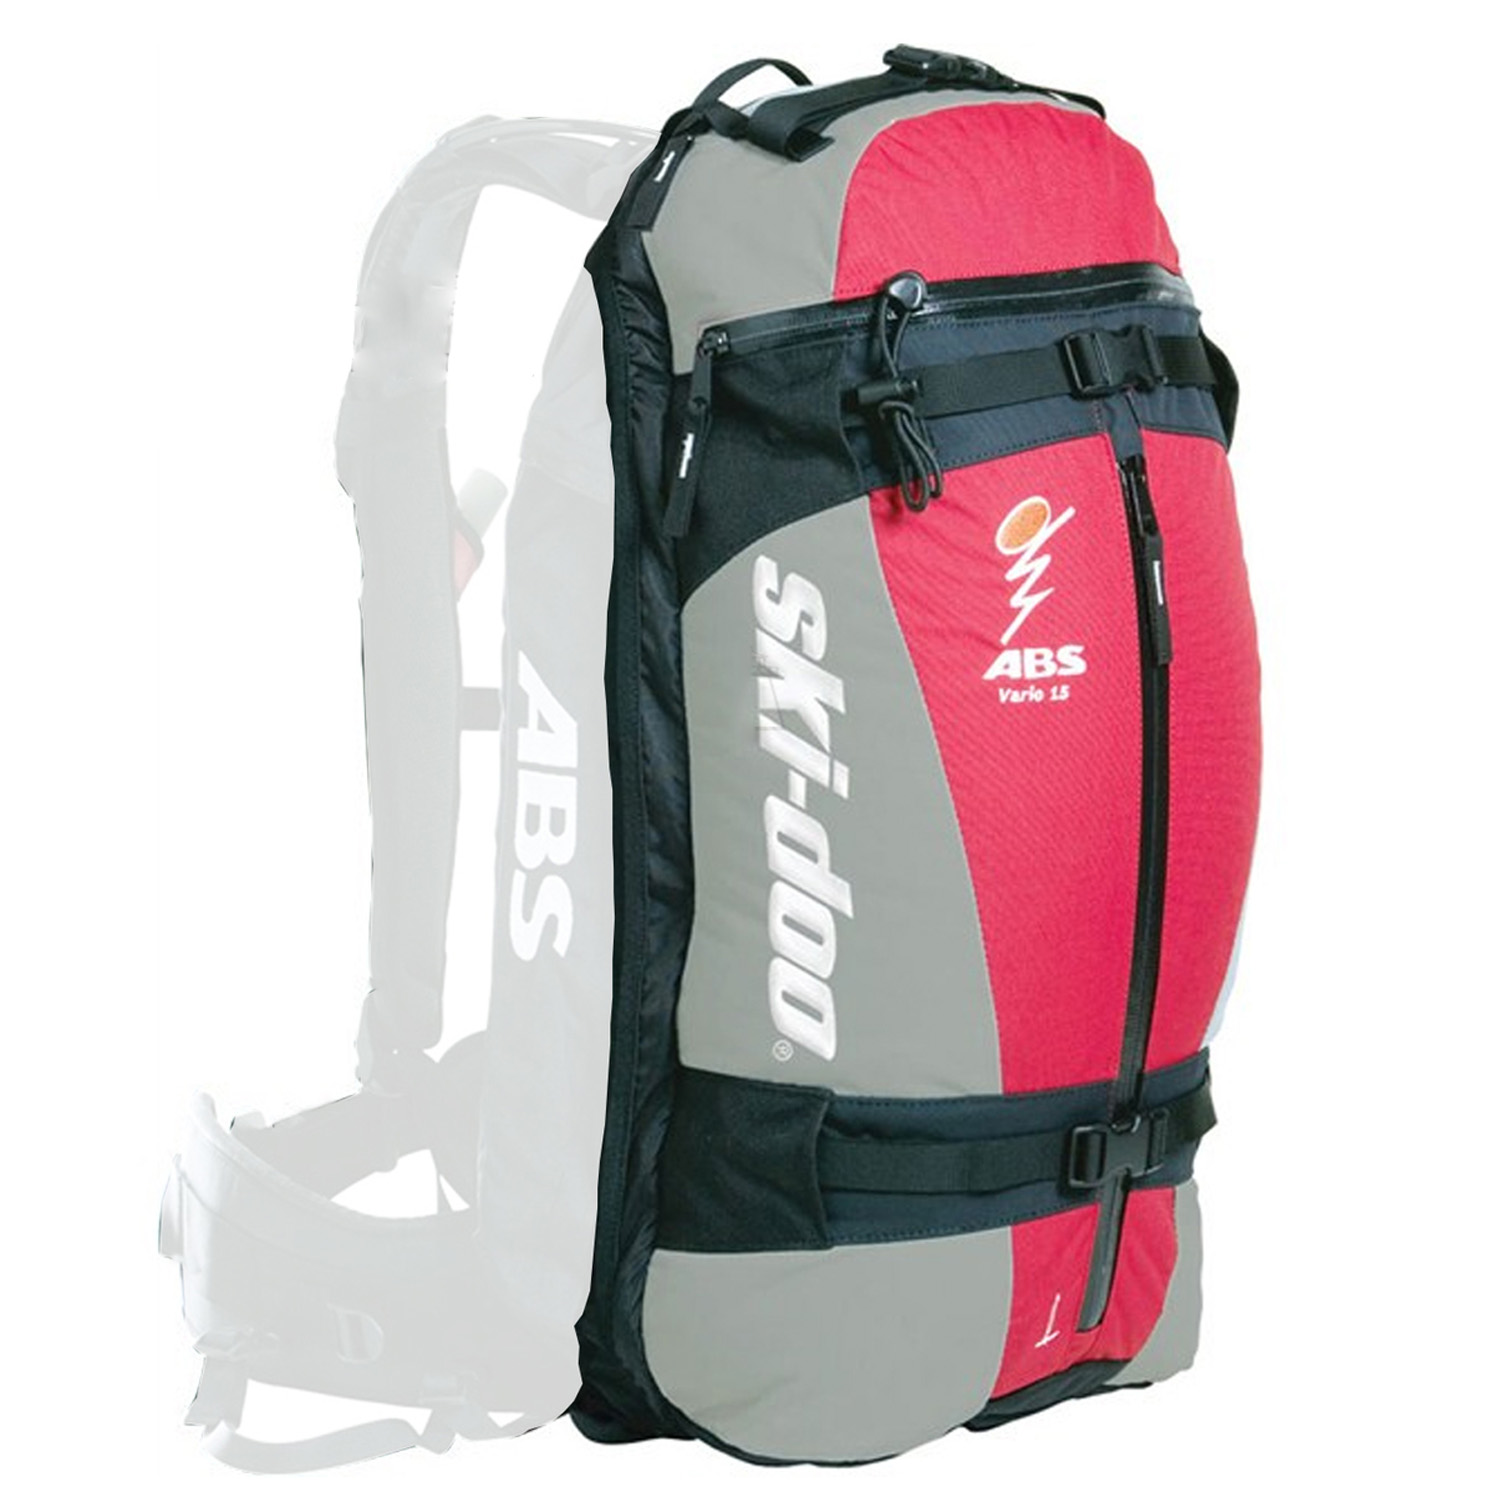 Ski-Doo, Ski-Doo Vario 15 Backpack By A, 4475910030 - image 1 of 1